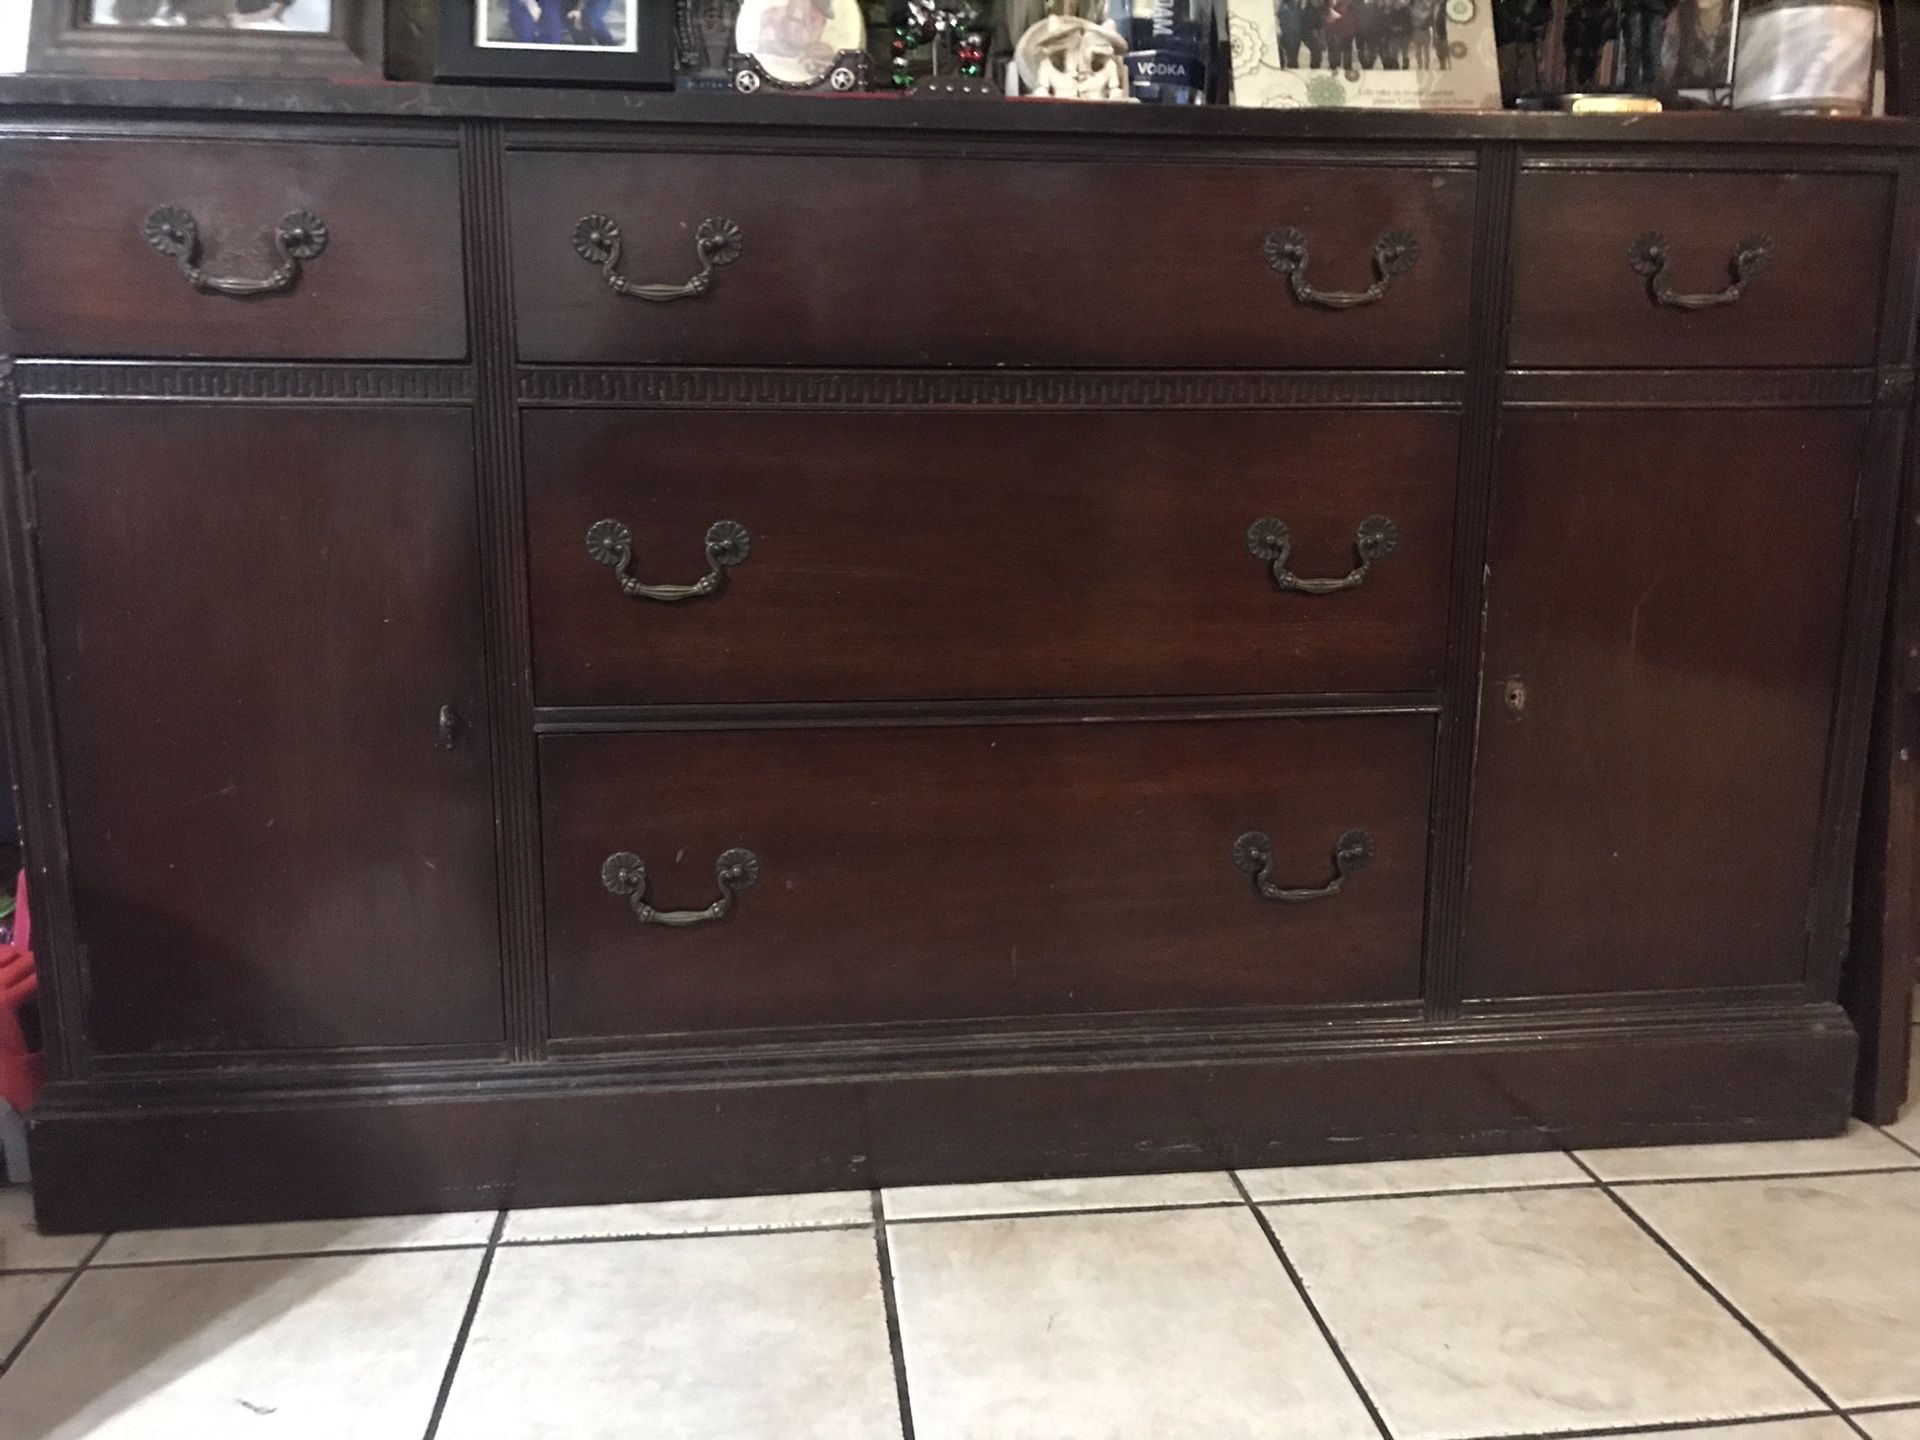 Dresser/buffet $300,missing 1 knob